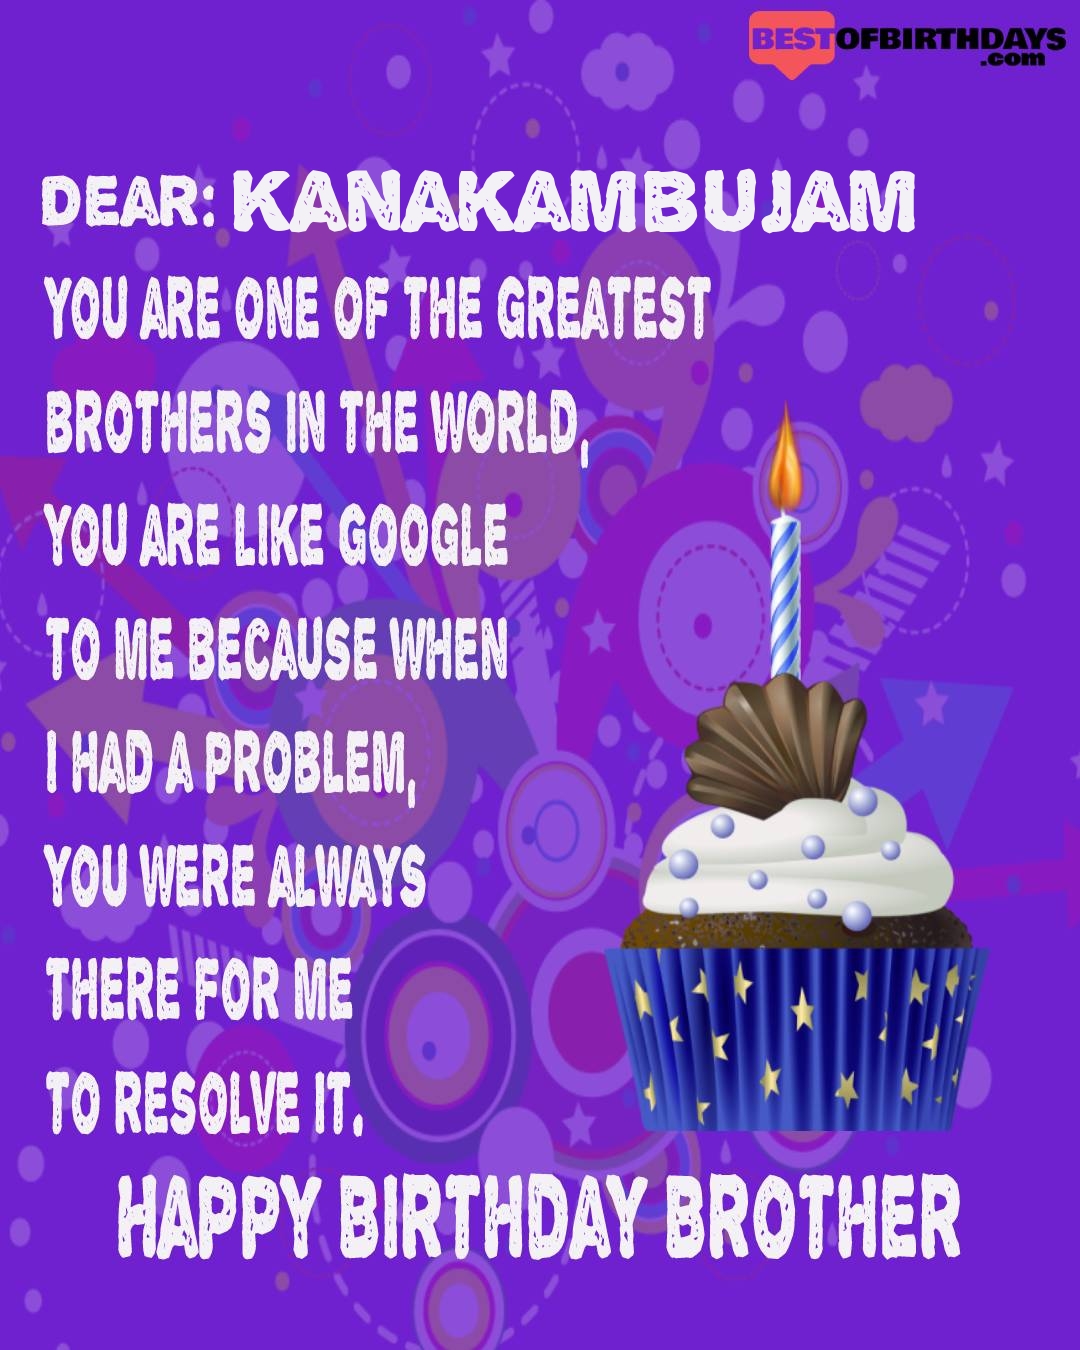 Happy birthday kanakambujam bhai brother bro